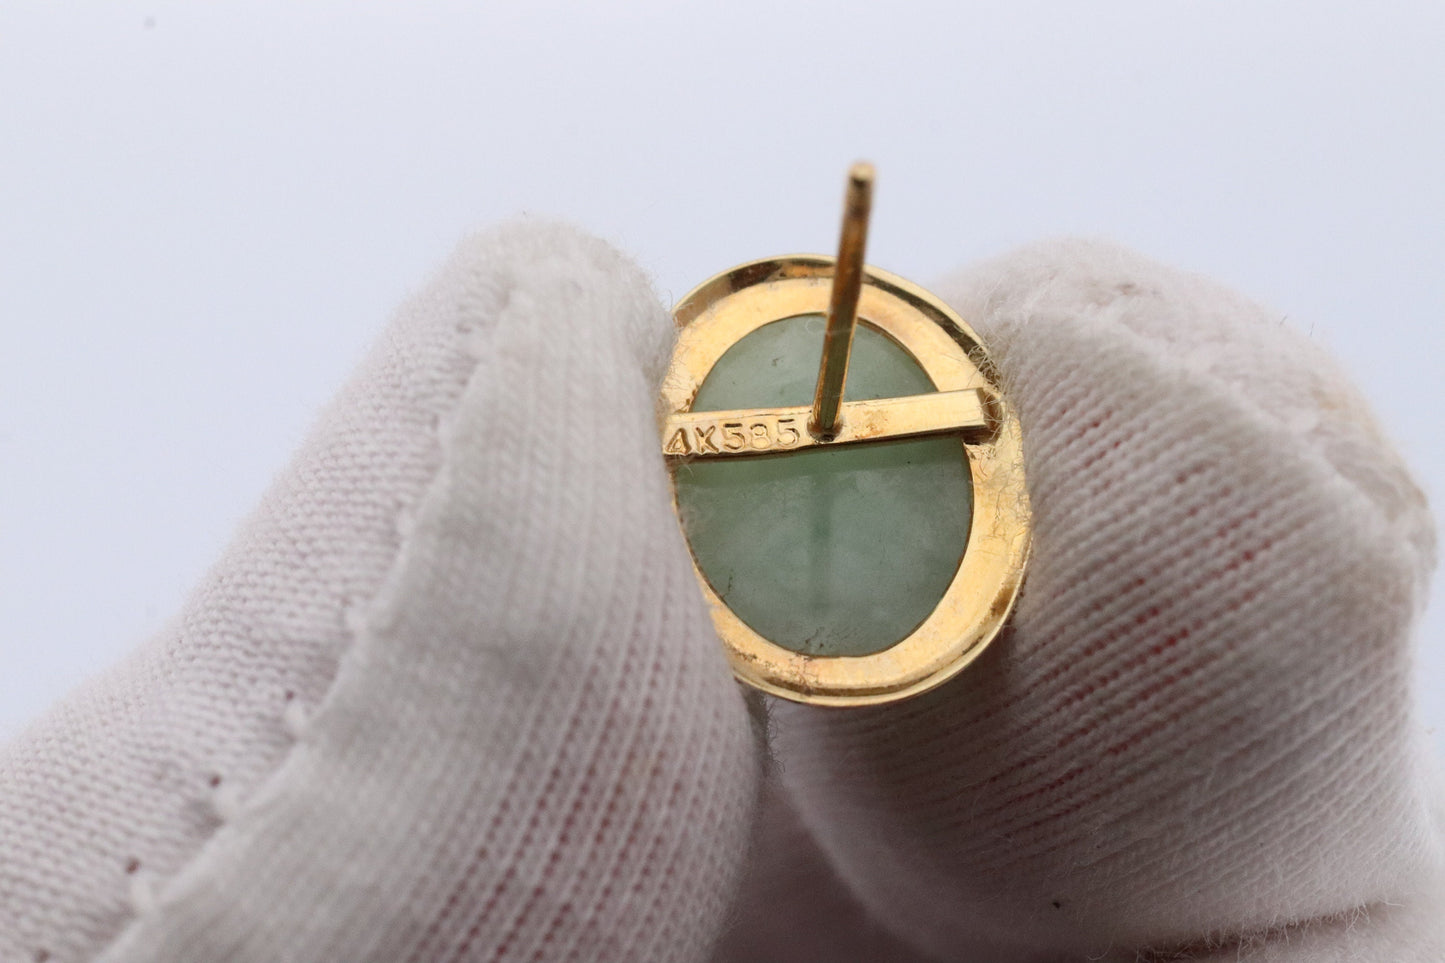 14k Jade stud earrings. Green Translucent Jade bezel set into 14k yellow gold. st(38)